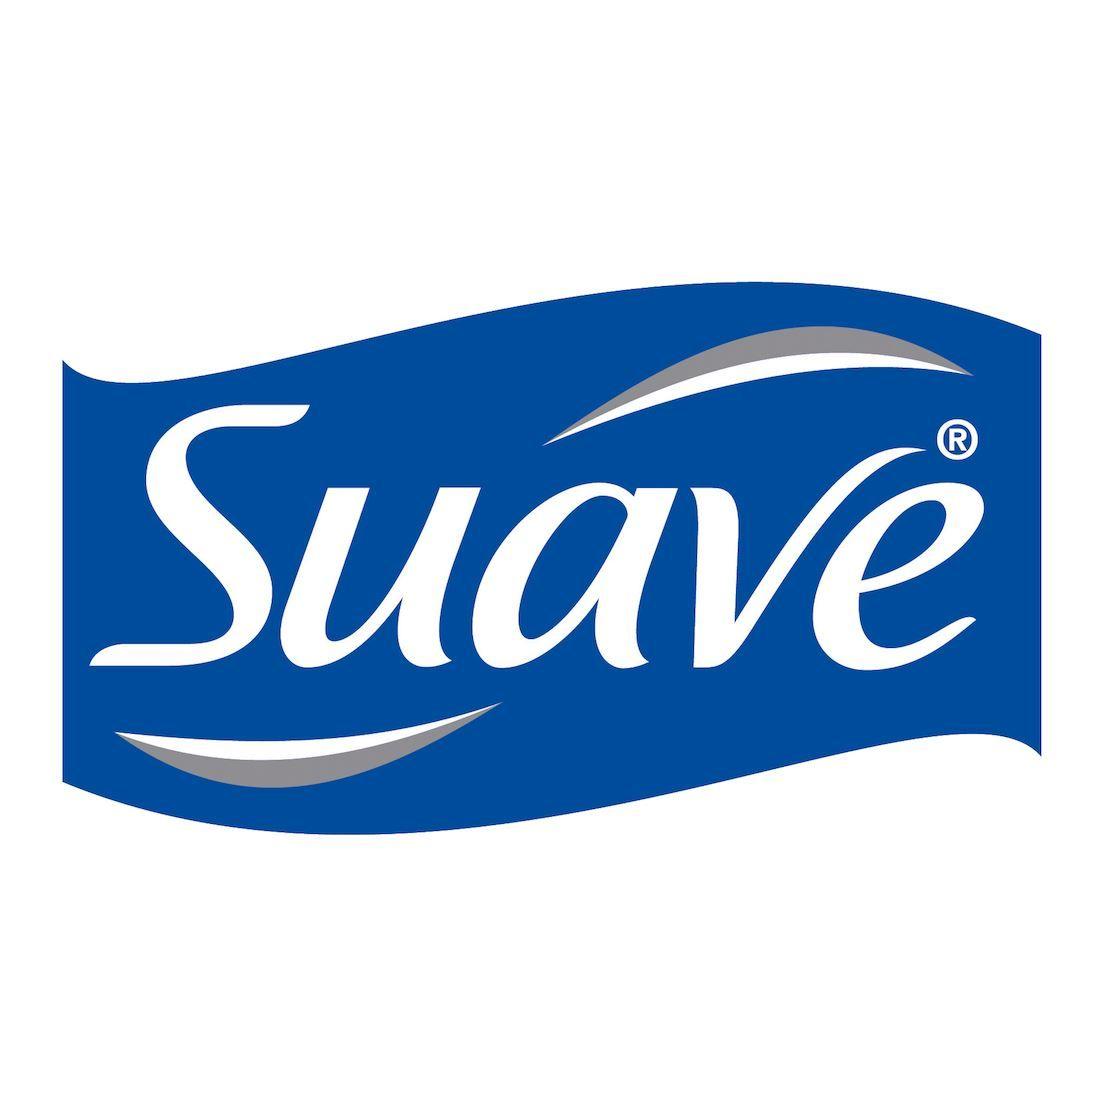 Suave Shampoo Logo - Suave reviews, photos and discussion - Makeupalley